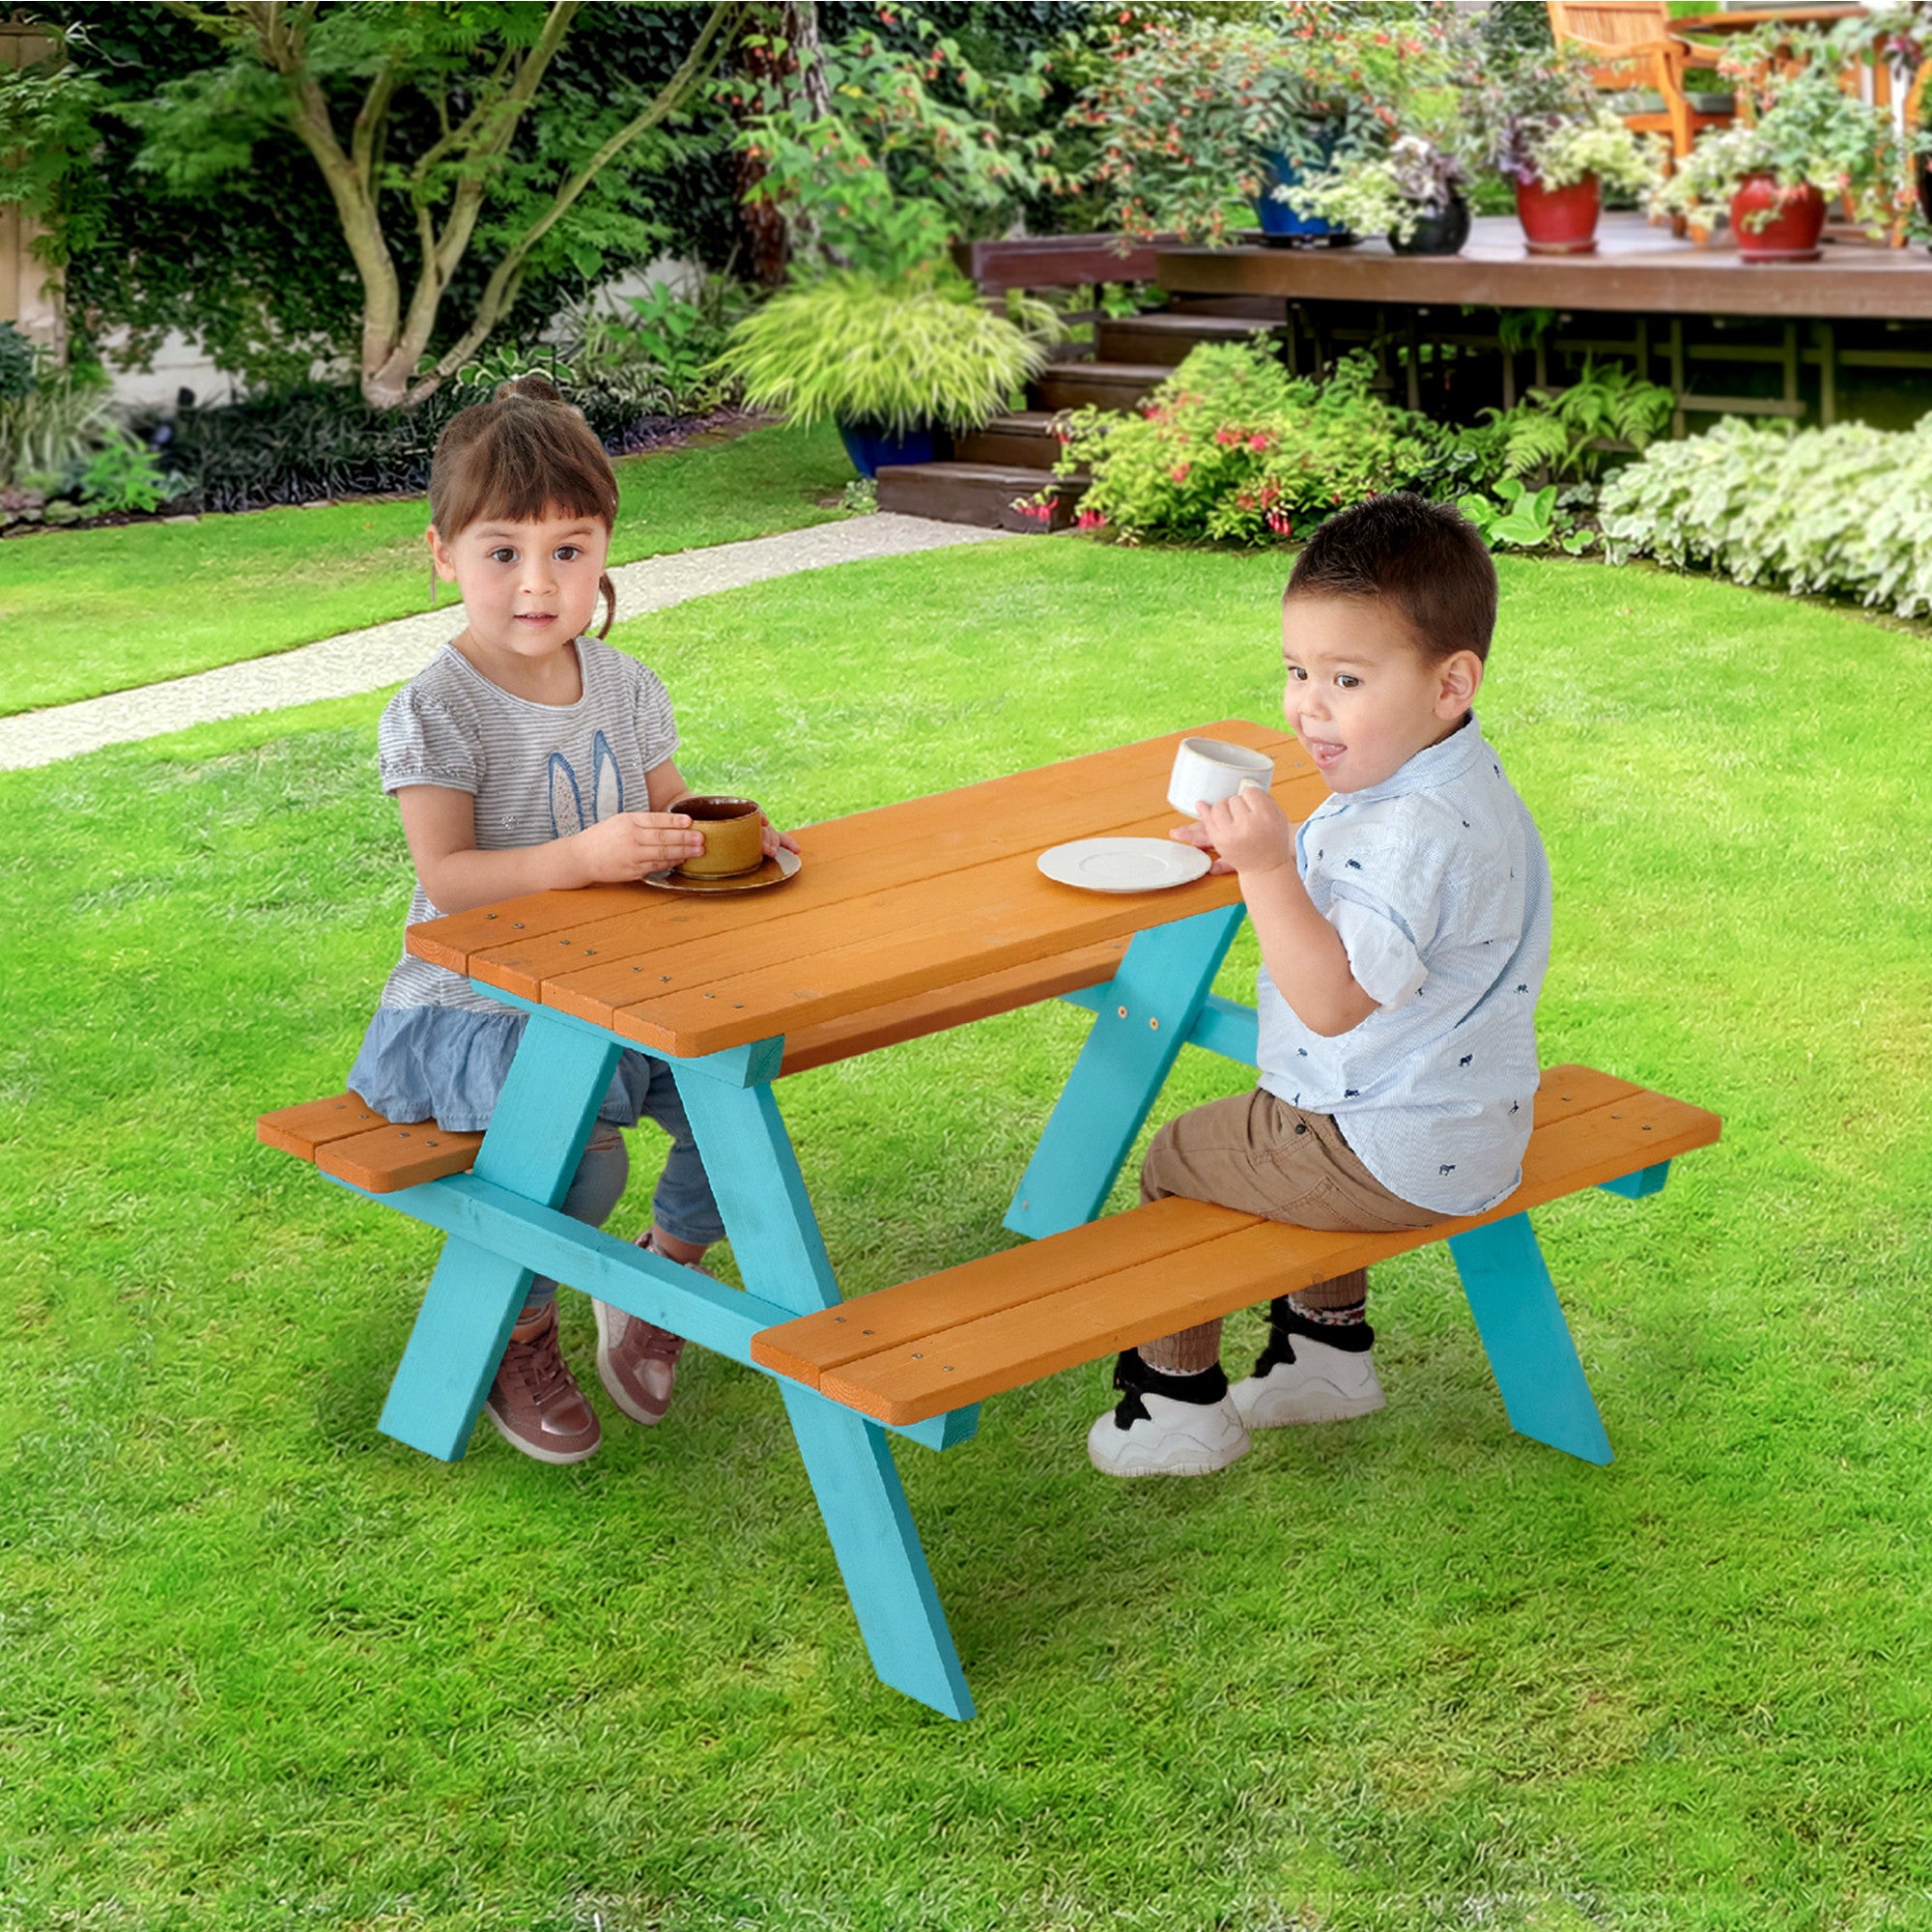 Teamson Kids Child Sized Wooden Outdoor Picnic Table, Warm Honey/Aqua